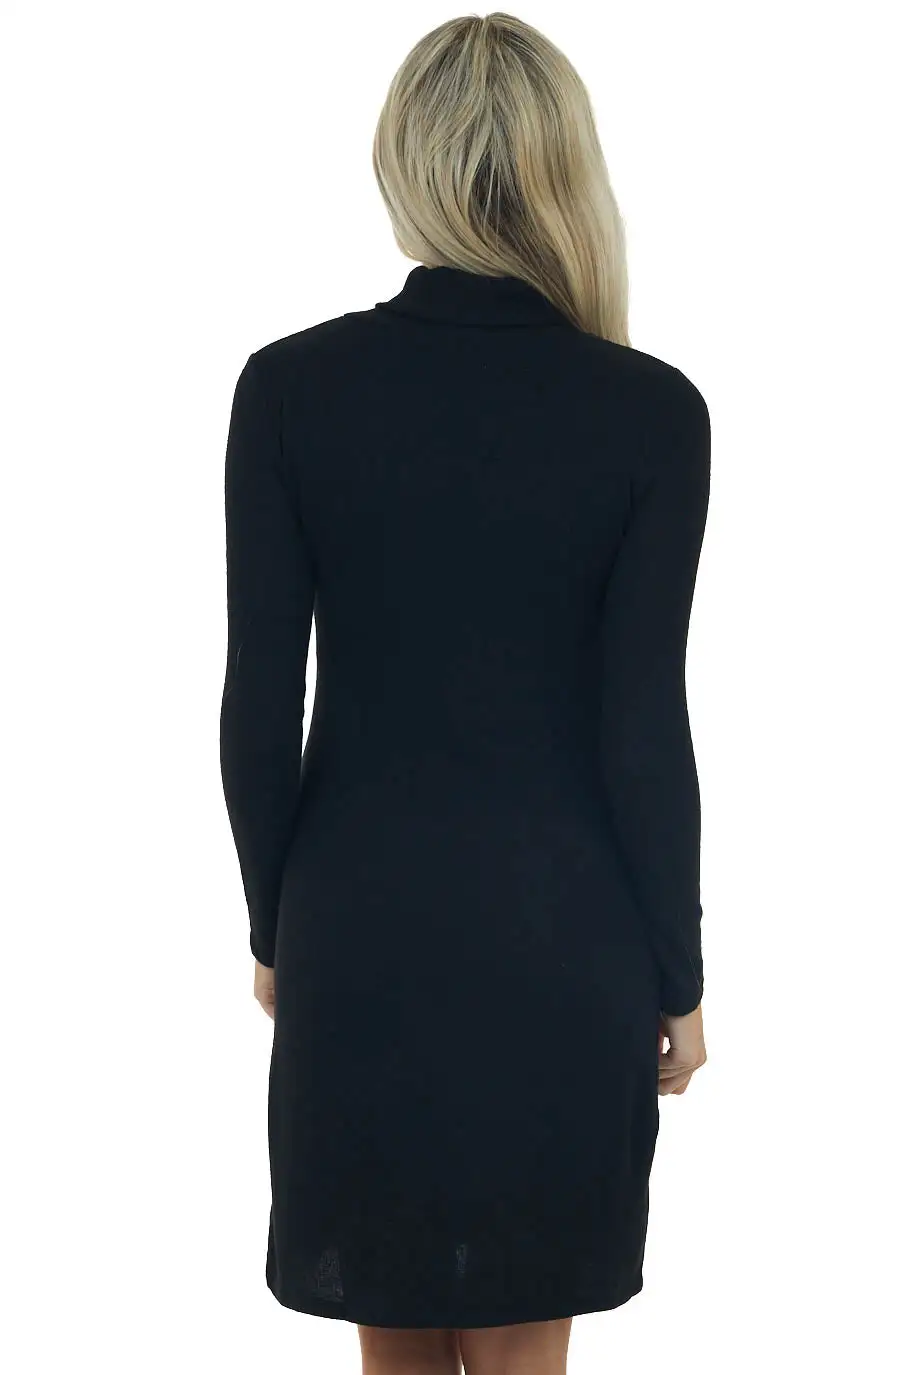 Black Brushed Knit Turtleneck Dress with Long Sleeves